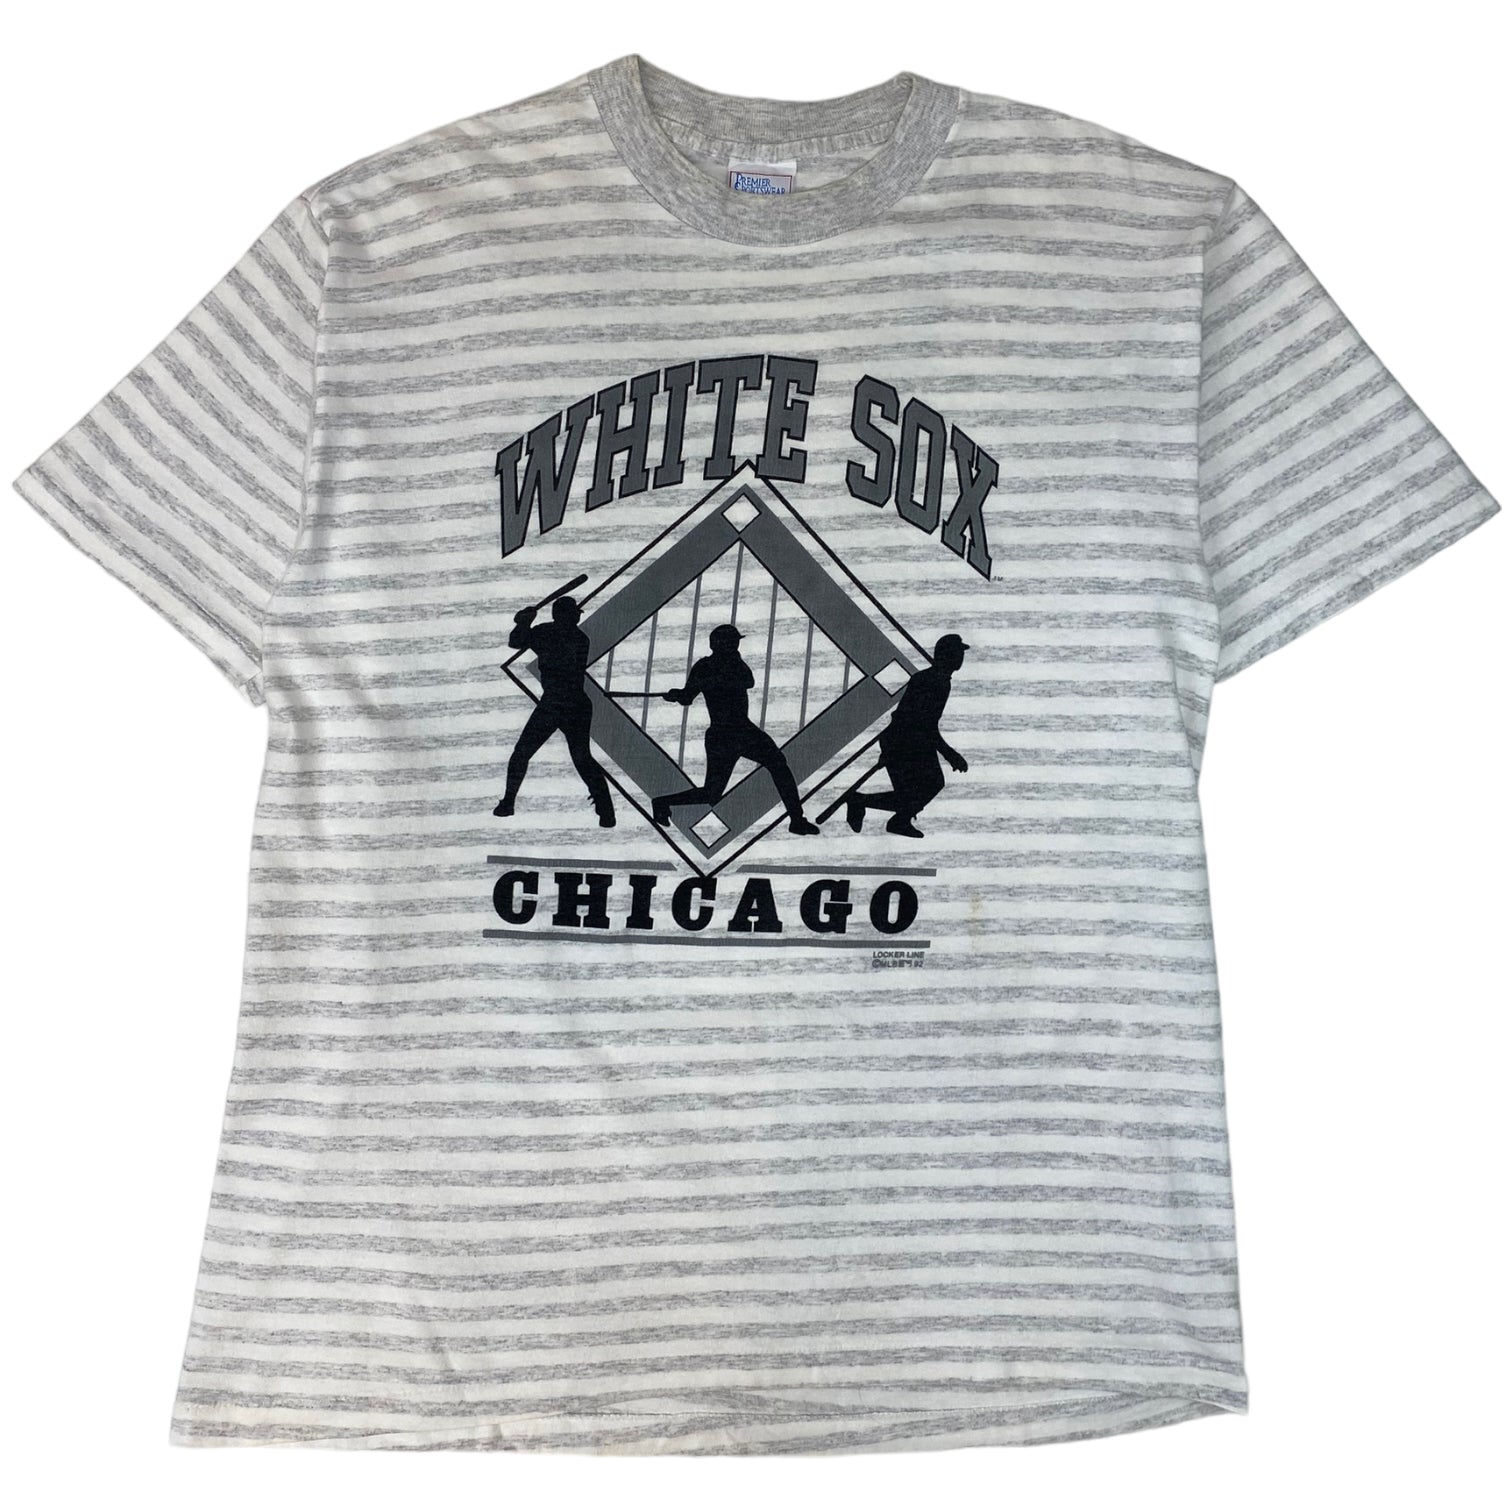 1992 Chicago White Sox Striped T-shirt - Baseball Team T-Shirt